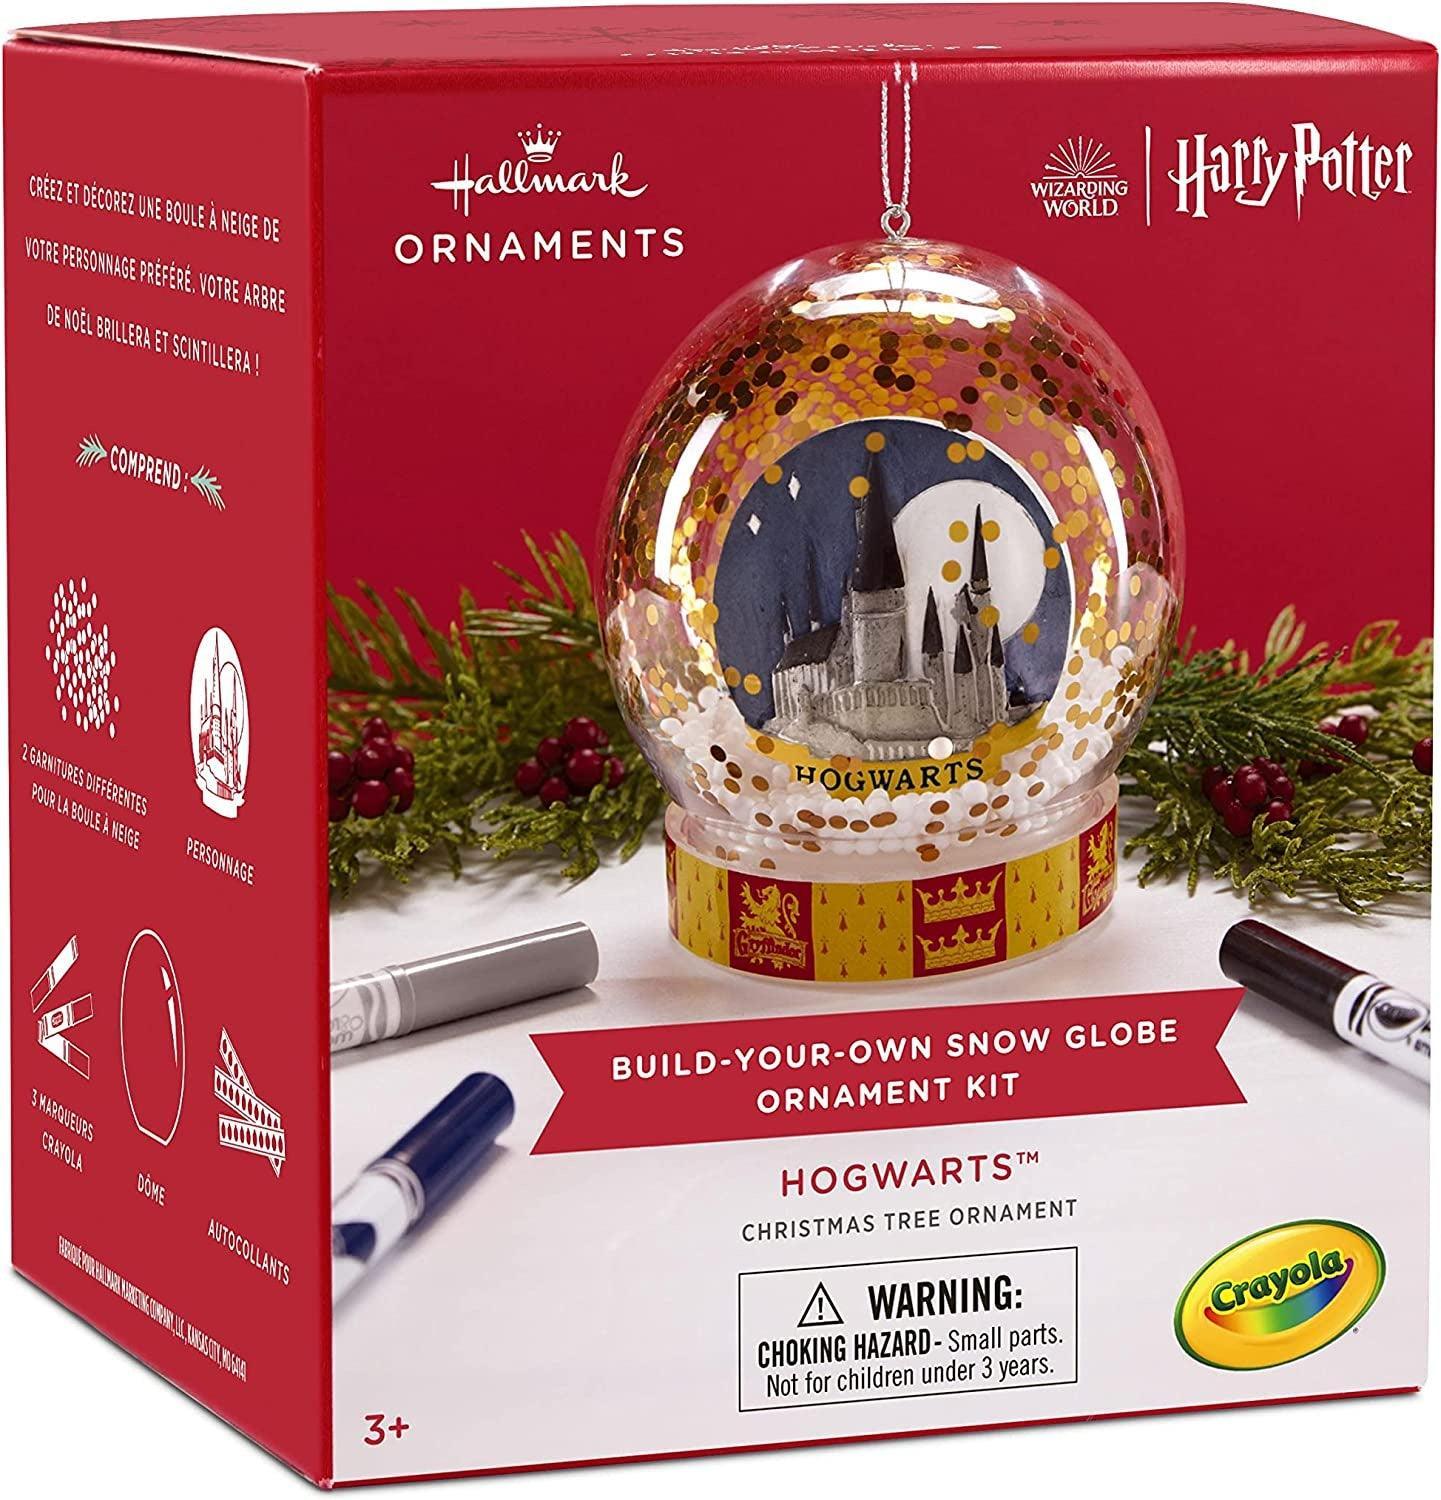 Hallmark Harry Potter Build-Your-Own Crayola Snow Globe Ornament Kit